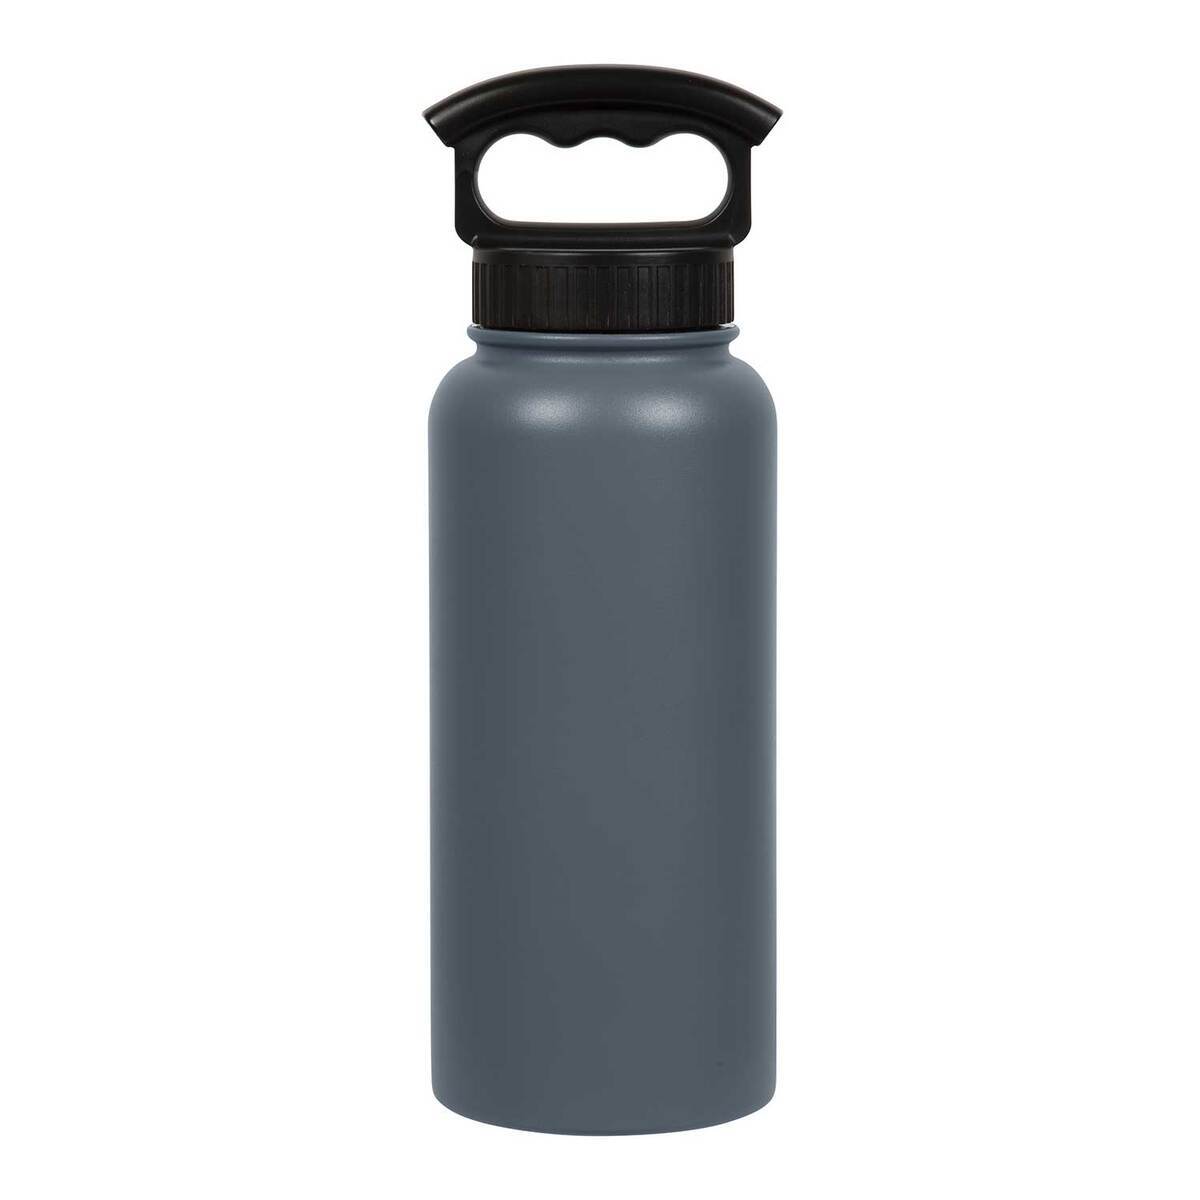 https://www.sportsmans.com/medias/fiftyfifty-32oz-wide-mouth-insulated-bottle-with-3-finger-grip-cap-slate-1696501-1.jpg?context=bWFzdGVyfGltYWdlc3wyNTM4NXxpbWFnZS9qcGVnfGg0NS9oNWUvMTAxNTc3NjIzMTQyNzAvMTY5NjUwMS0xX2Jhc2UtY29udmVyc2lvbkZvcm1hdF8xMjAwLWNvbnZlcnNpb25Gb3JtYXR8MmQ5OWVkNWViMmZhN2I2N2IzMTE5MWQyOTMyMDY4ZDk4YjYzZjAzZGM2MDFlOGZkYWViYTMyMzdmM2Q1NzY3NA